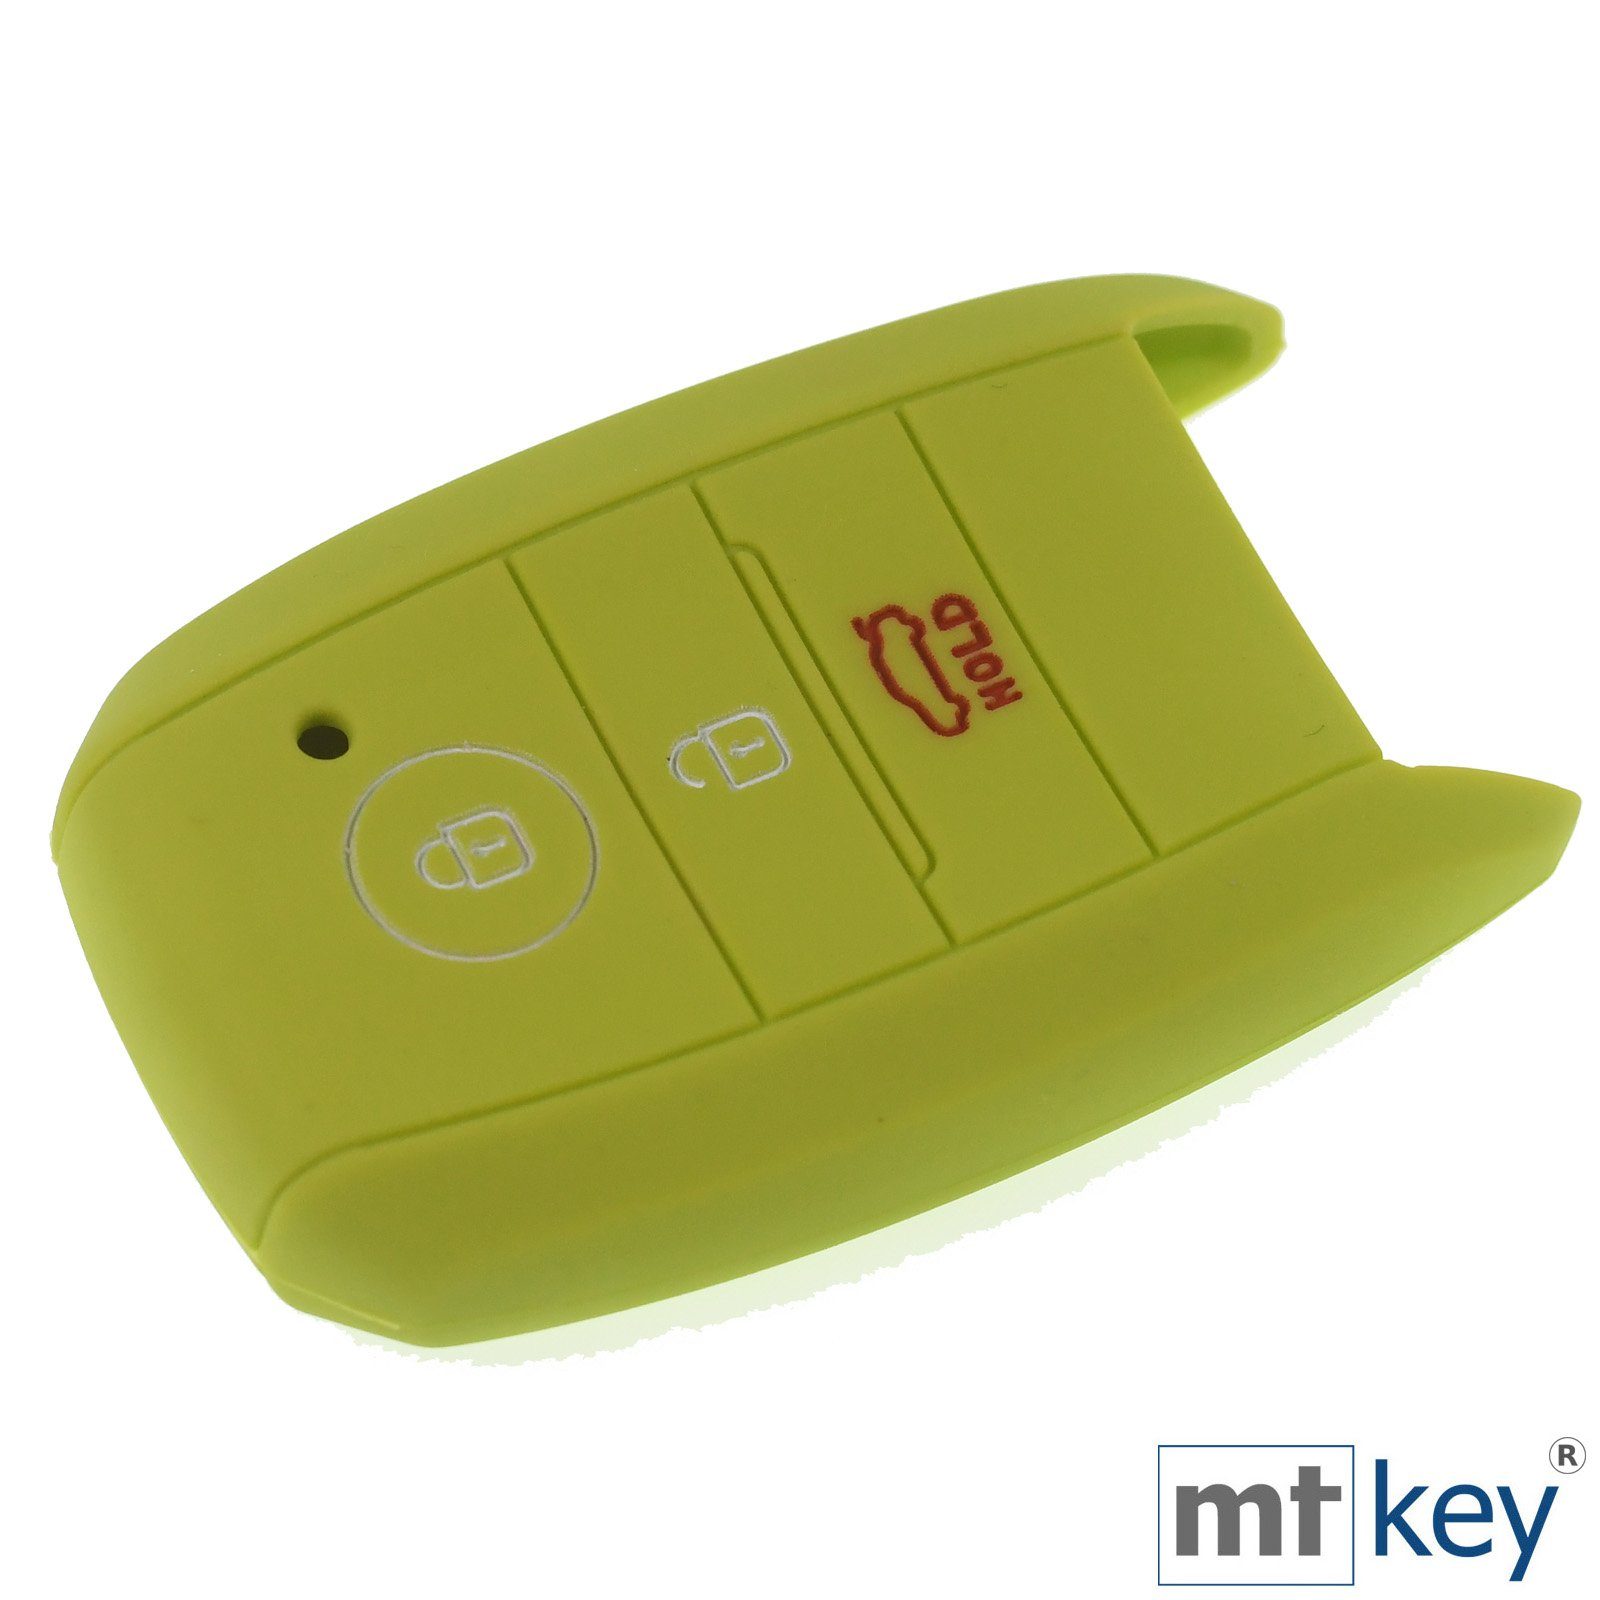 mit Schutzhülle mt-key Autoschlüssel Ceed Soul Picantio Sportage KIA 3 Schlüsseltasche Apfelgrün Silikon KEYLESS für Schlüsselband, Stonic Softcase Rio Tasten